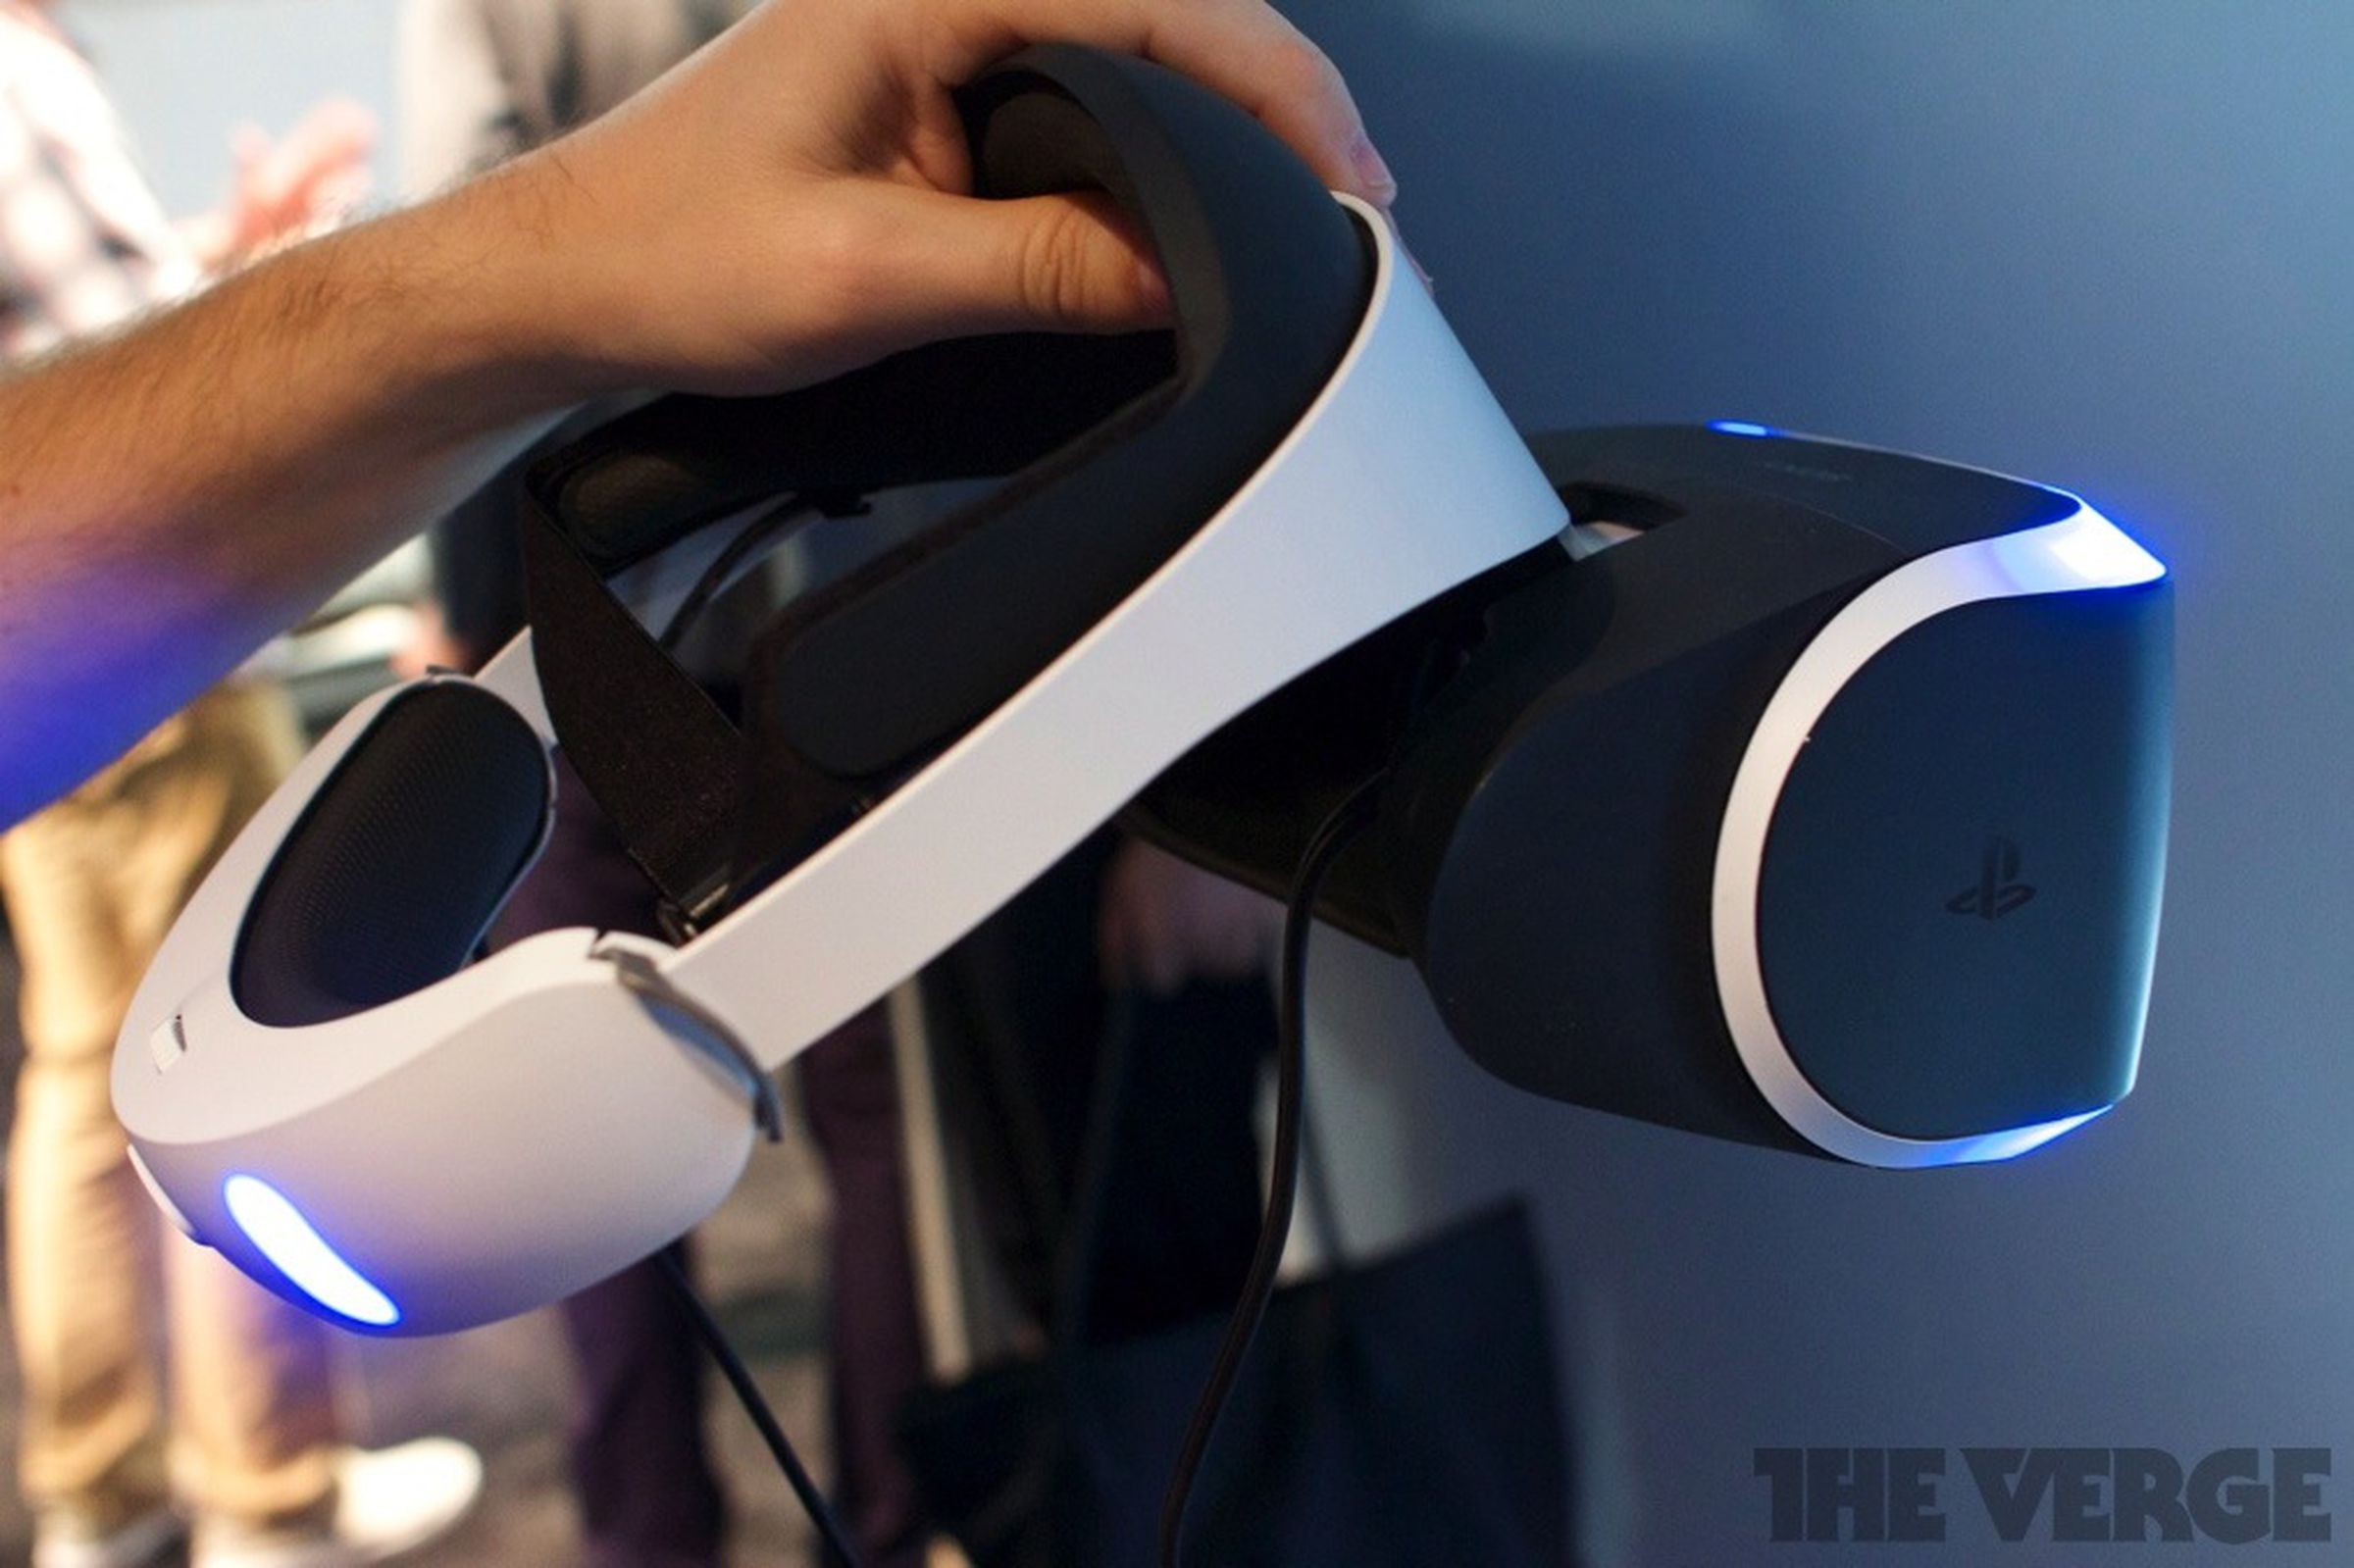 Sony's Project Morpheus VR headset